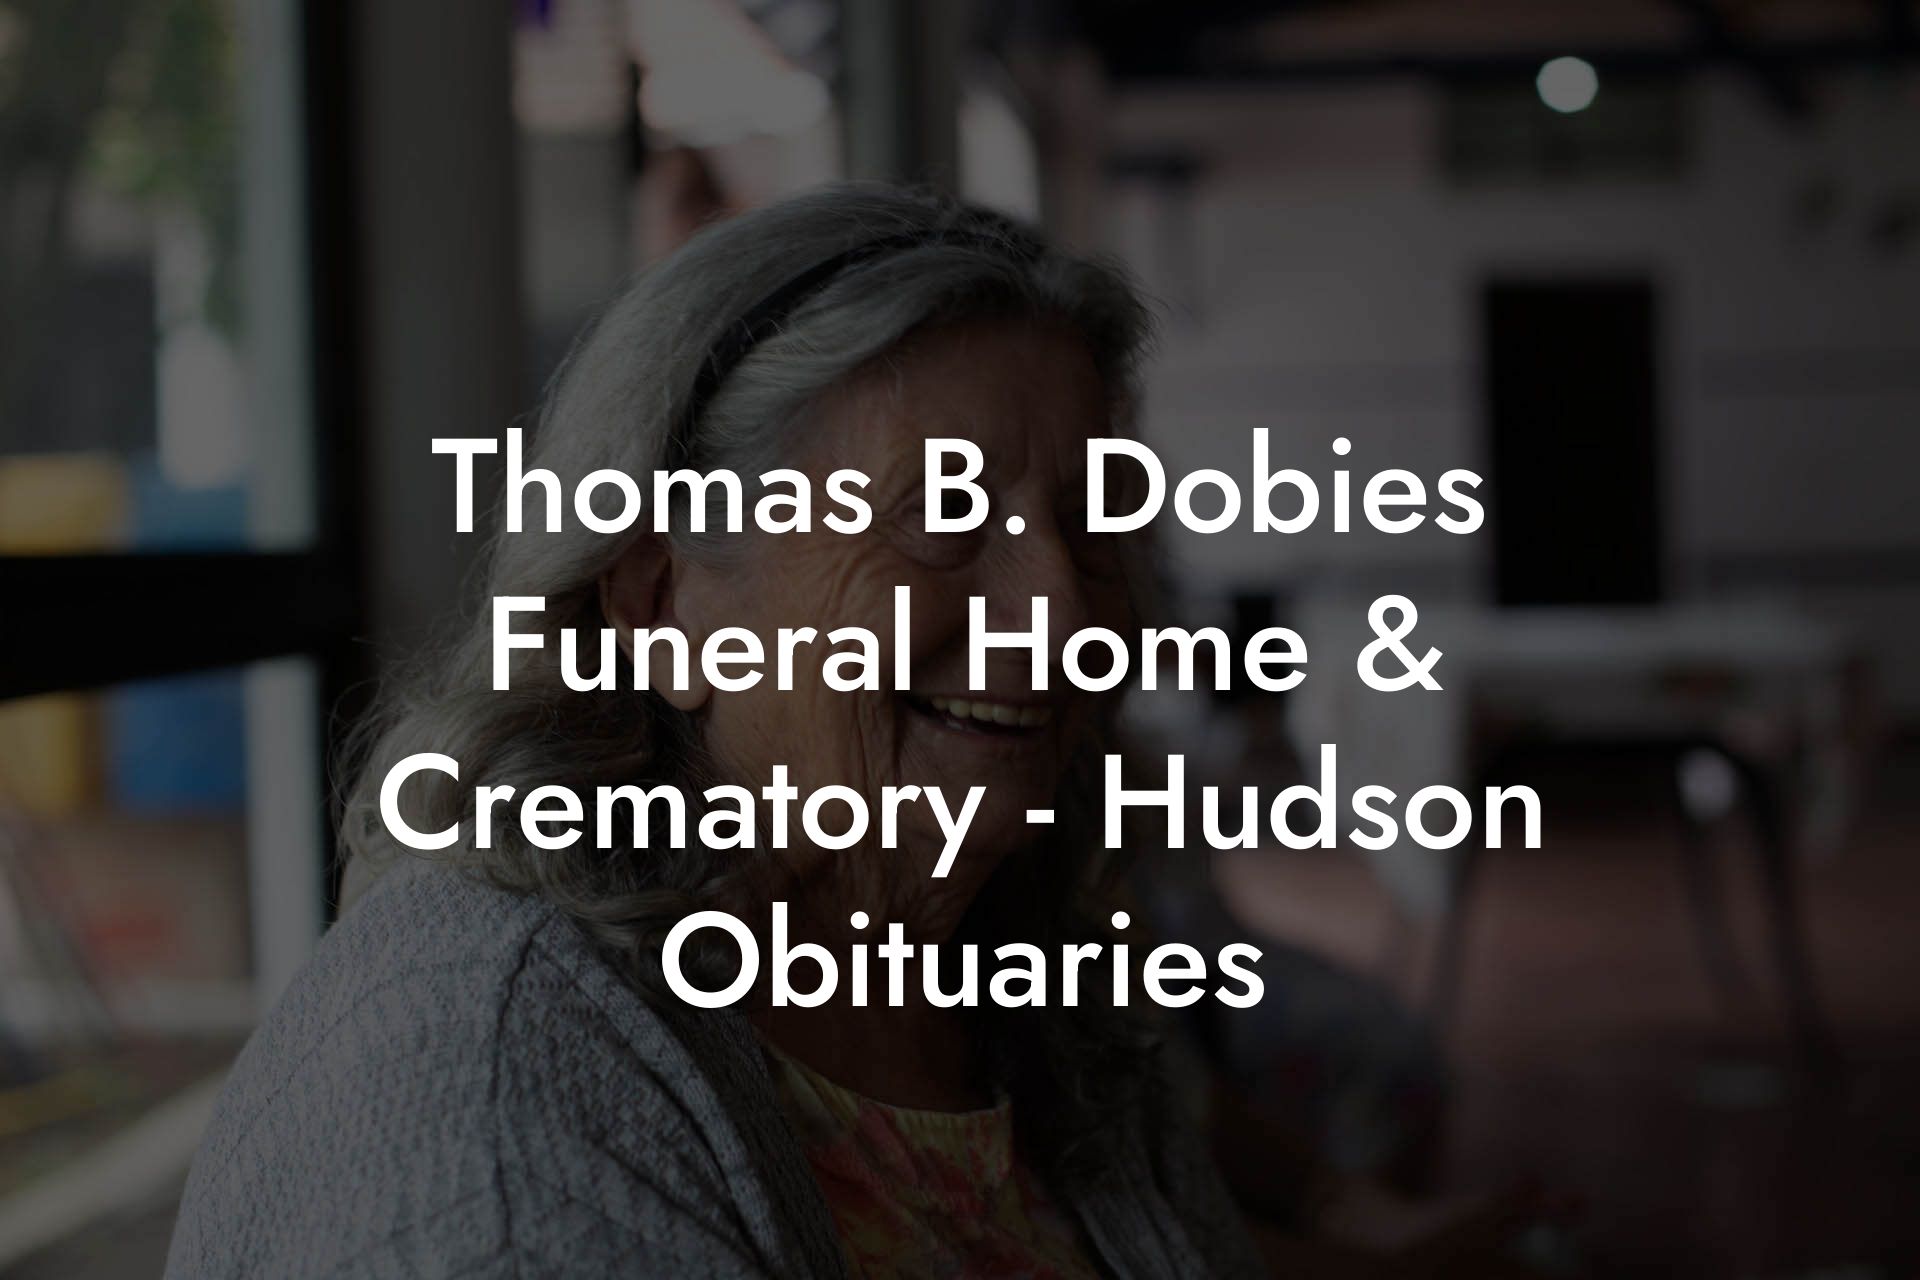 Thomas B. Dobies Funeral Home & Crematory - Hudson Obituaries